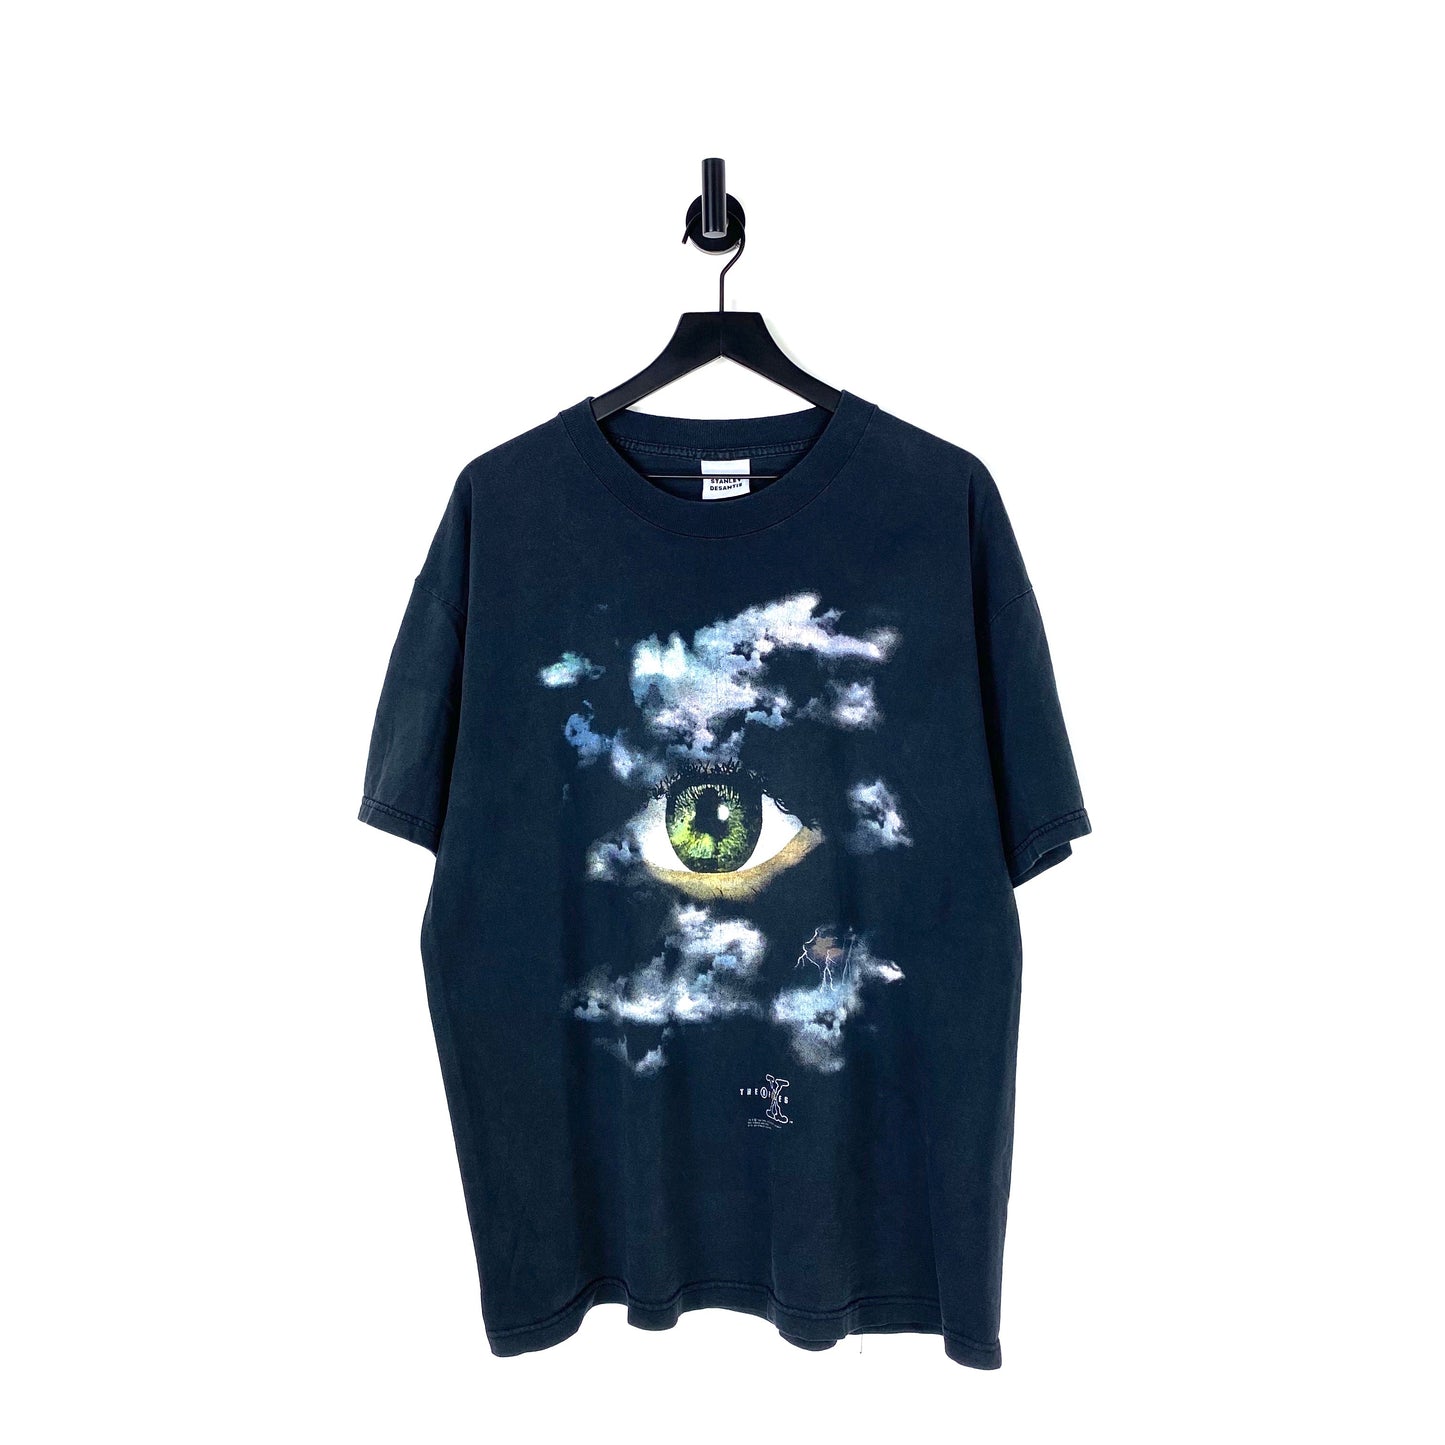 90s The X Files T Shirt - XL